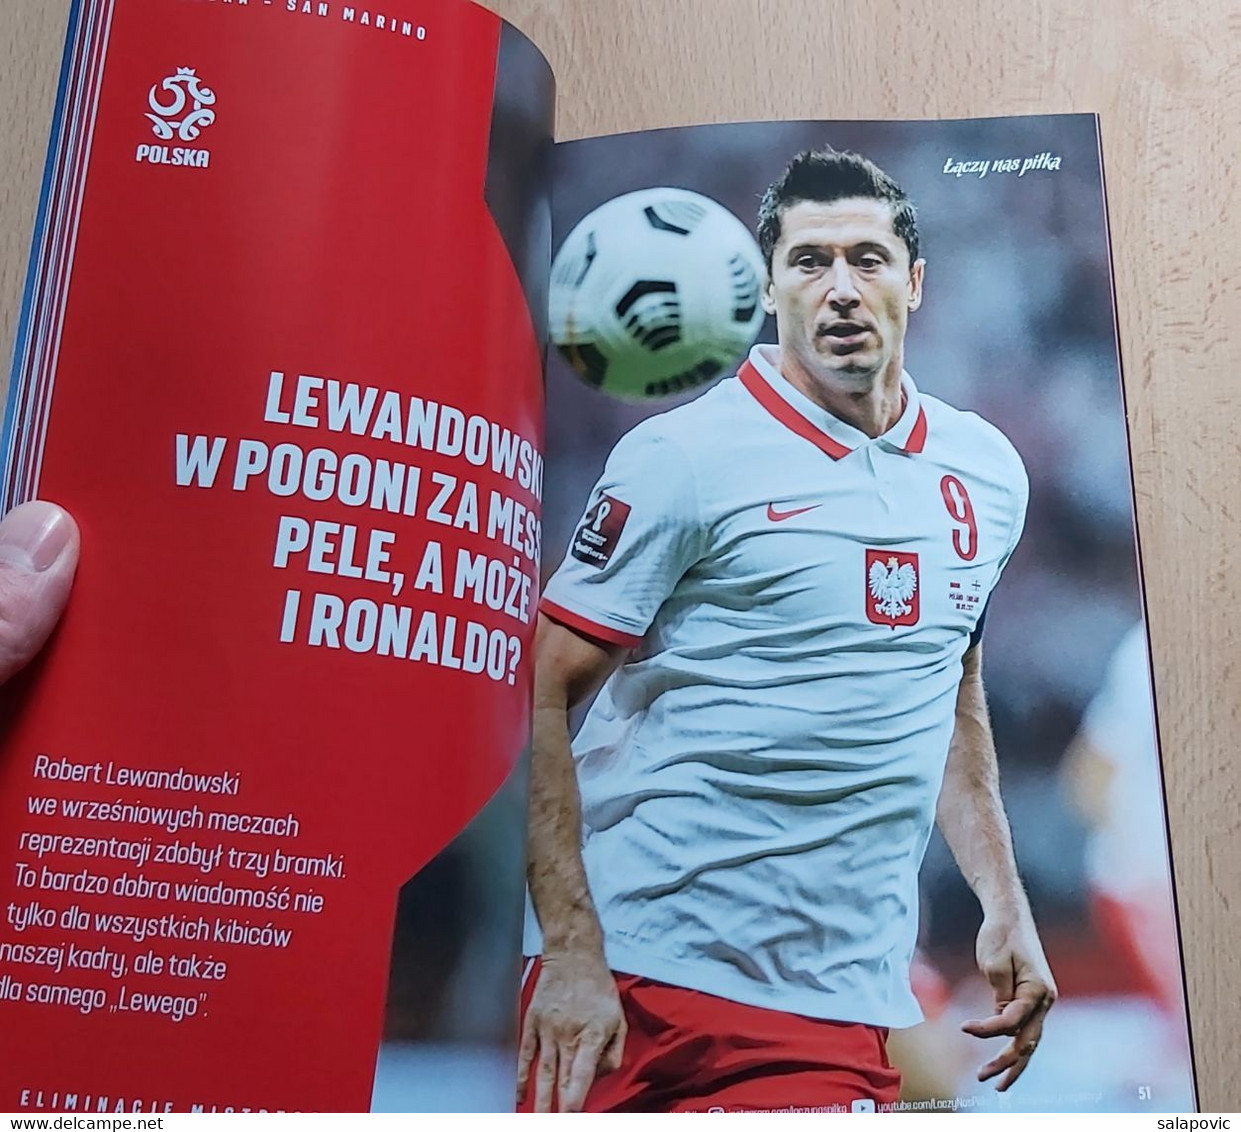 Poland V San Marino QUALIFICATIONS FOR FIFA WORLD CUP QATAR 2022, 9. 10. 2021 FOOTBALL CROATIA FOOTBALL MATCH PROGRAM - Libros